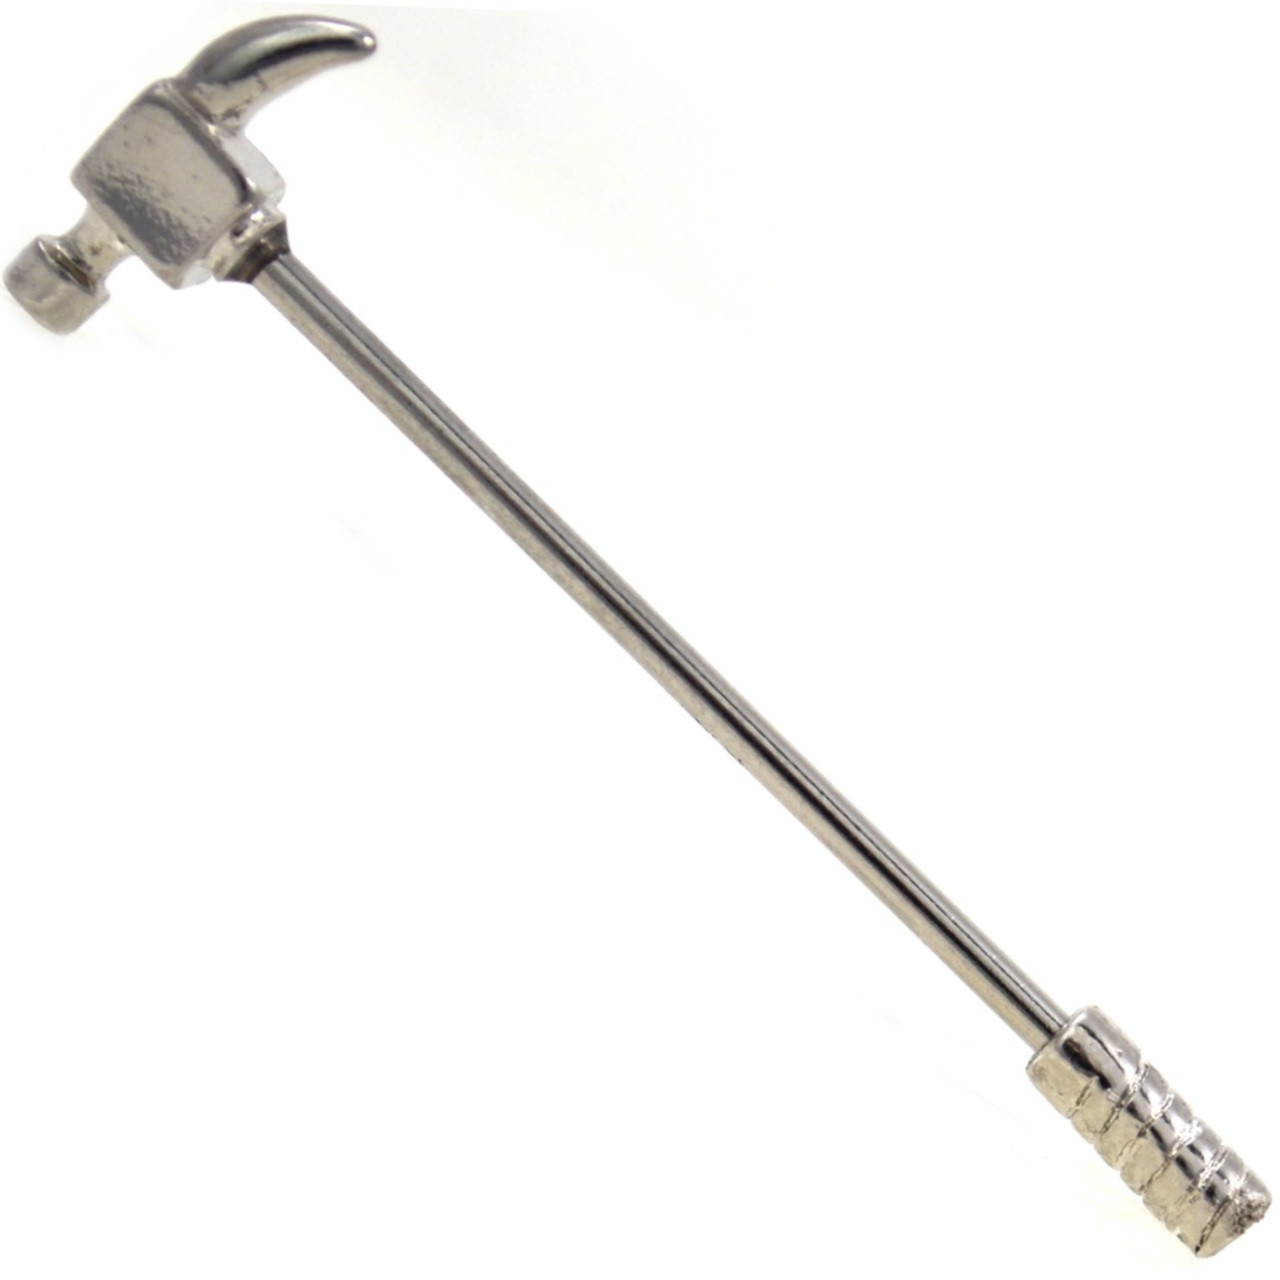 The Hammer Steel Industrial Barbell 14G 35mm | BodyDazz.com
